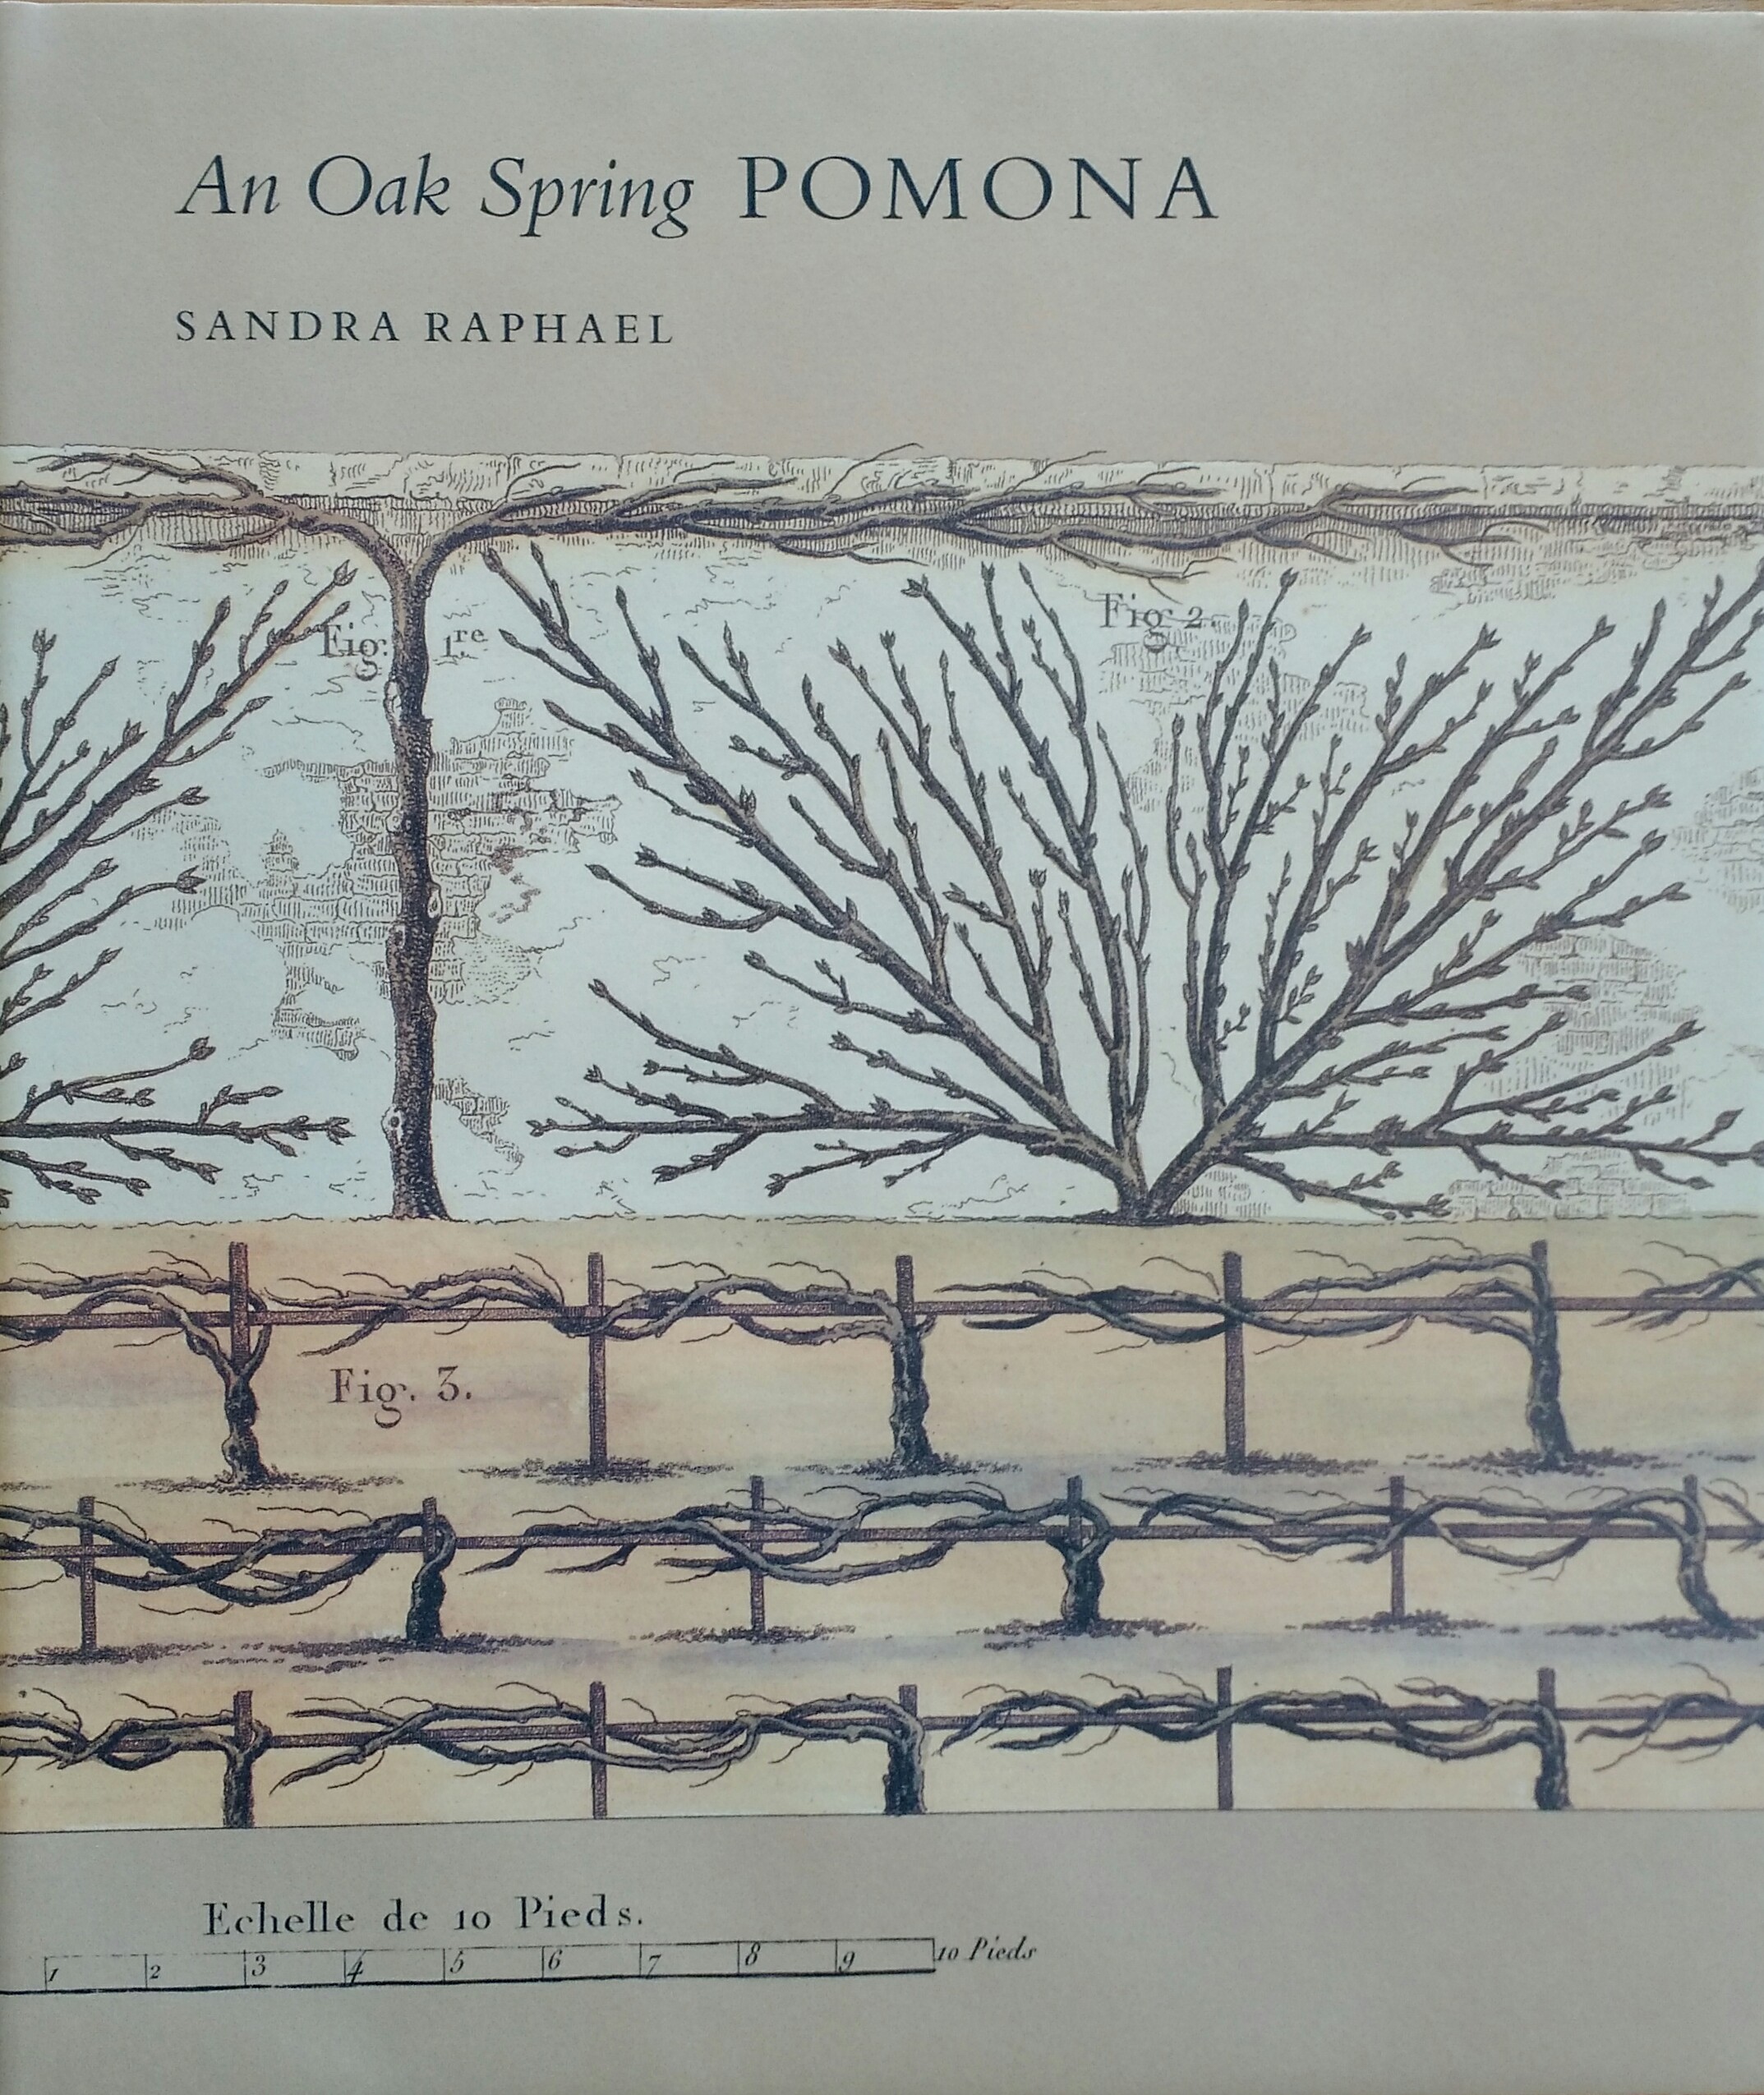  An Oak Spring Pomona, 1990